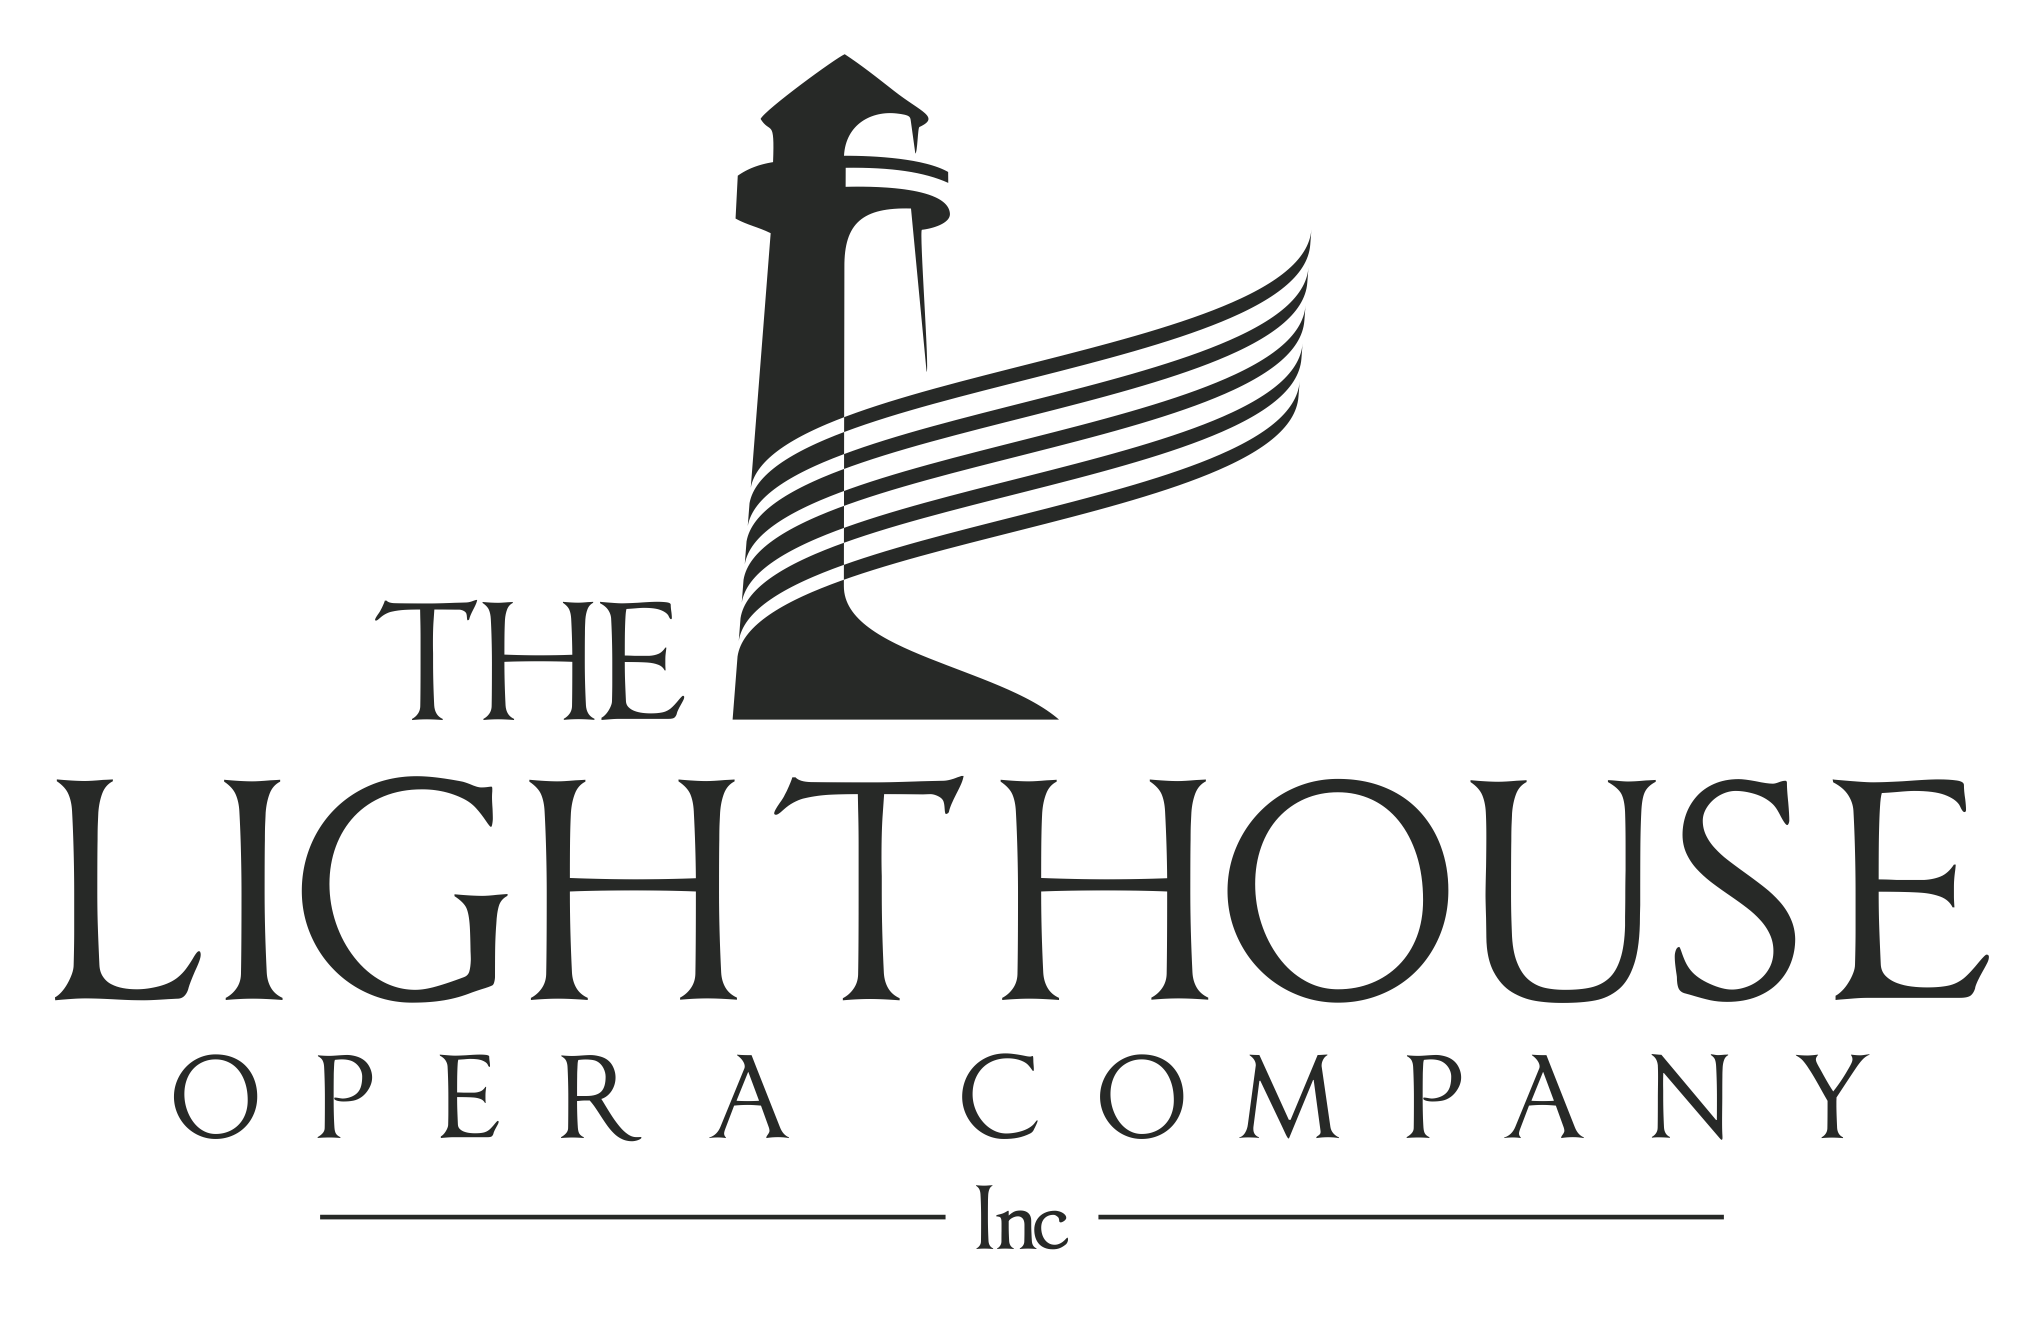 The Lighthouse Opera Company